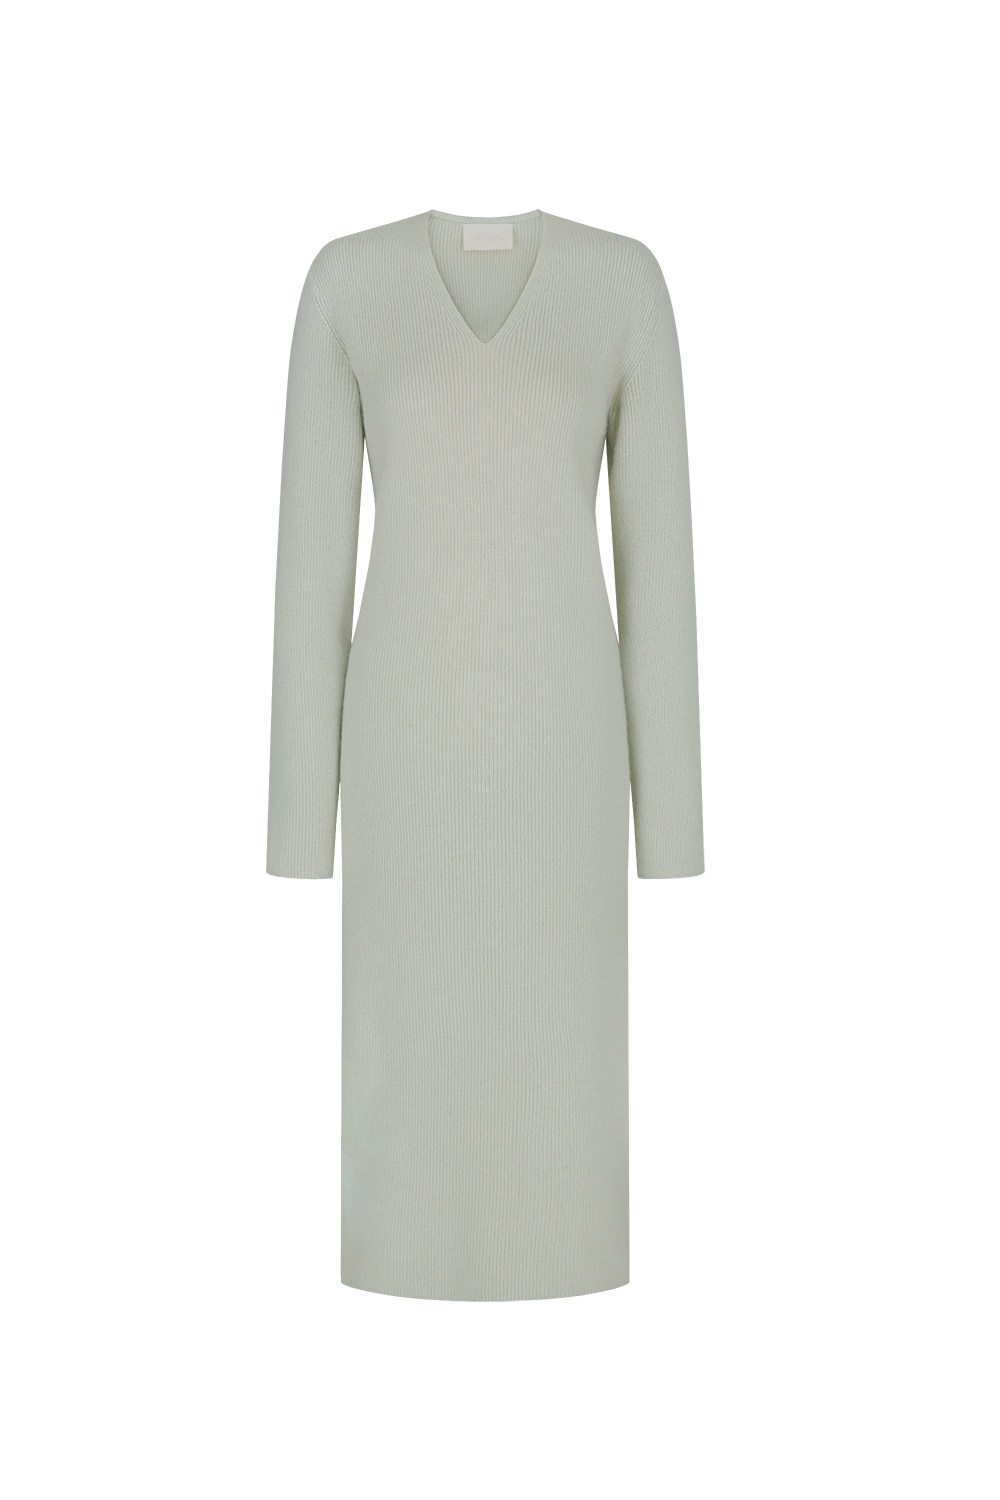 GOYIR1953 Premium Basic Knitted Dress